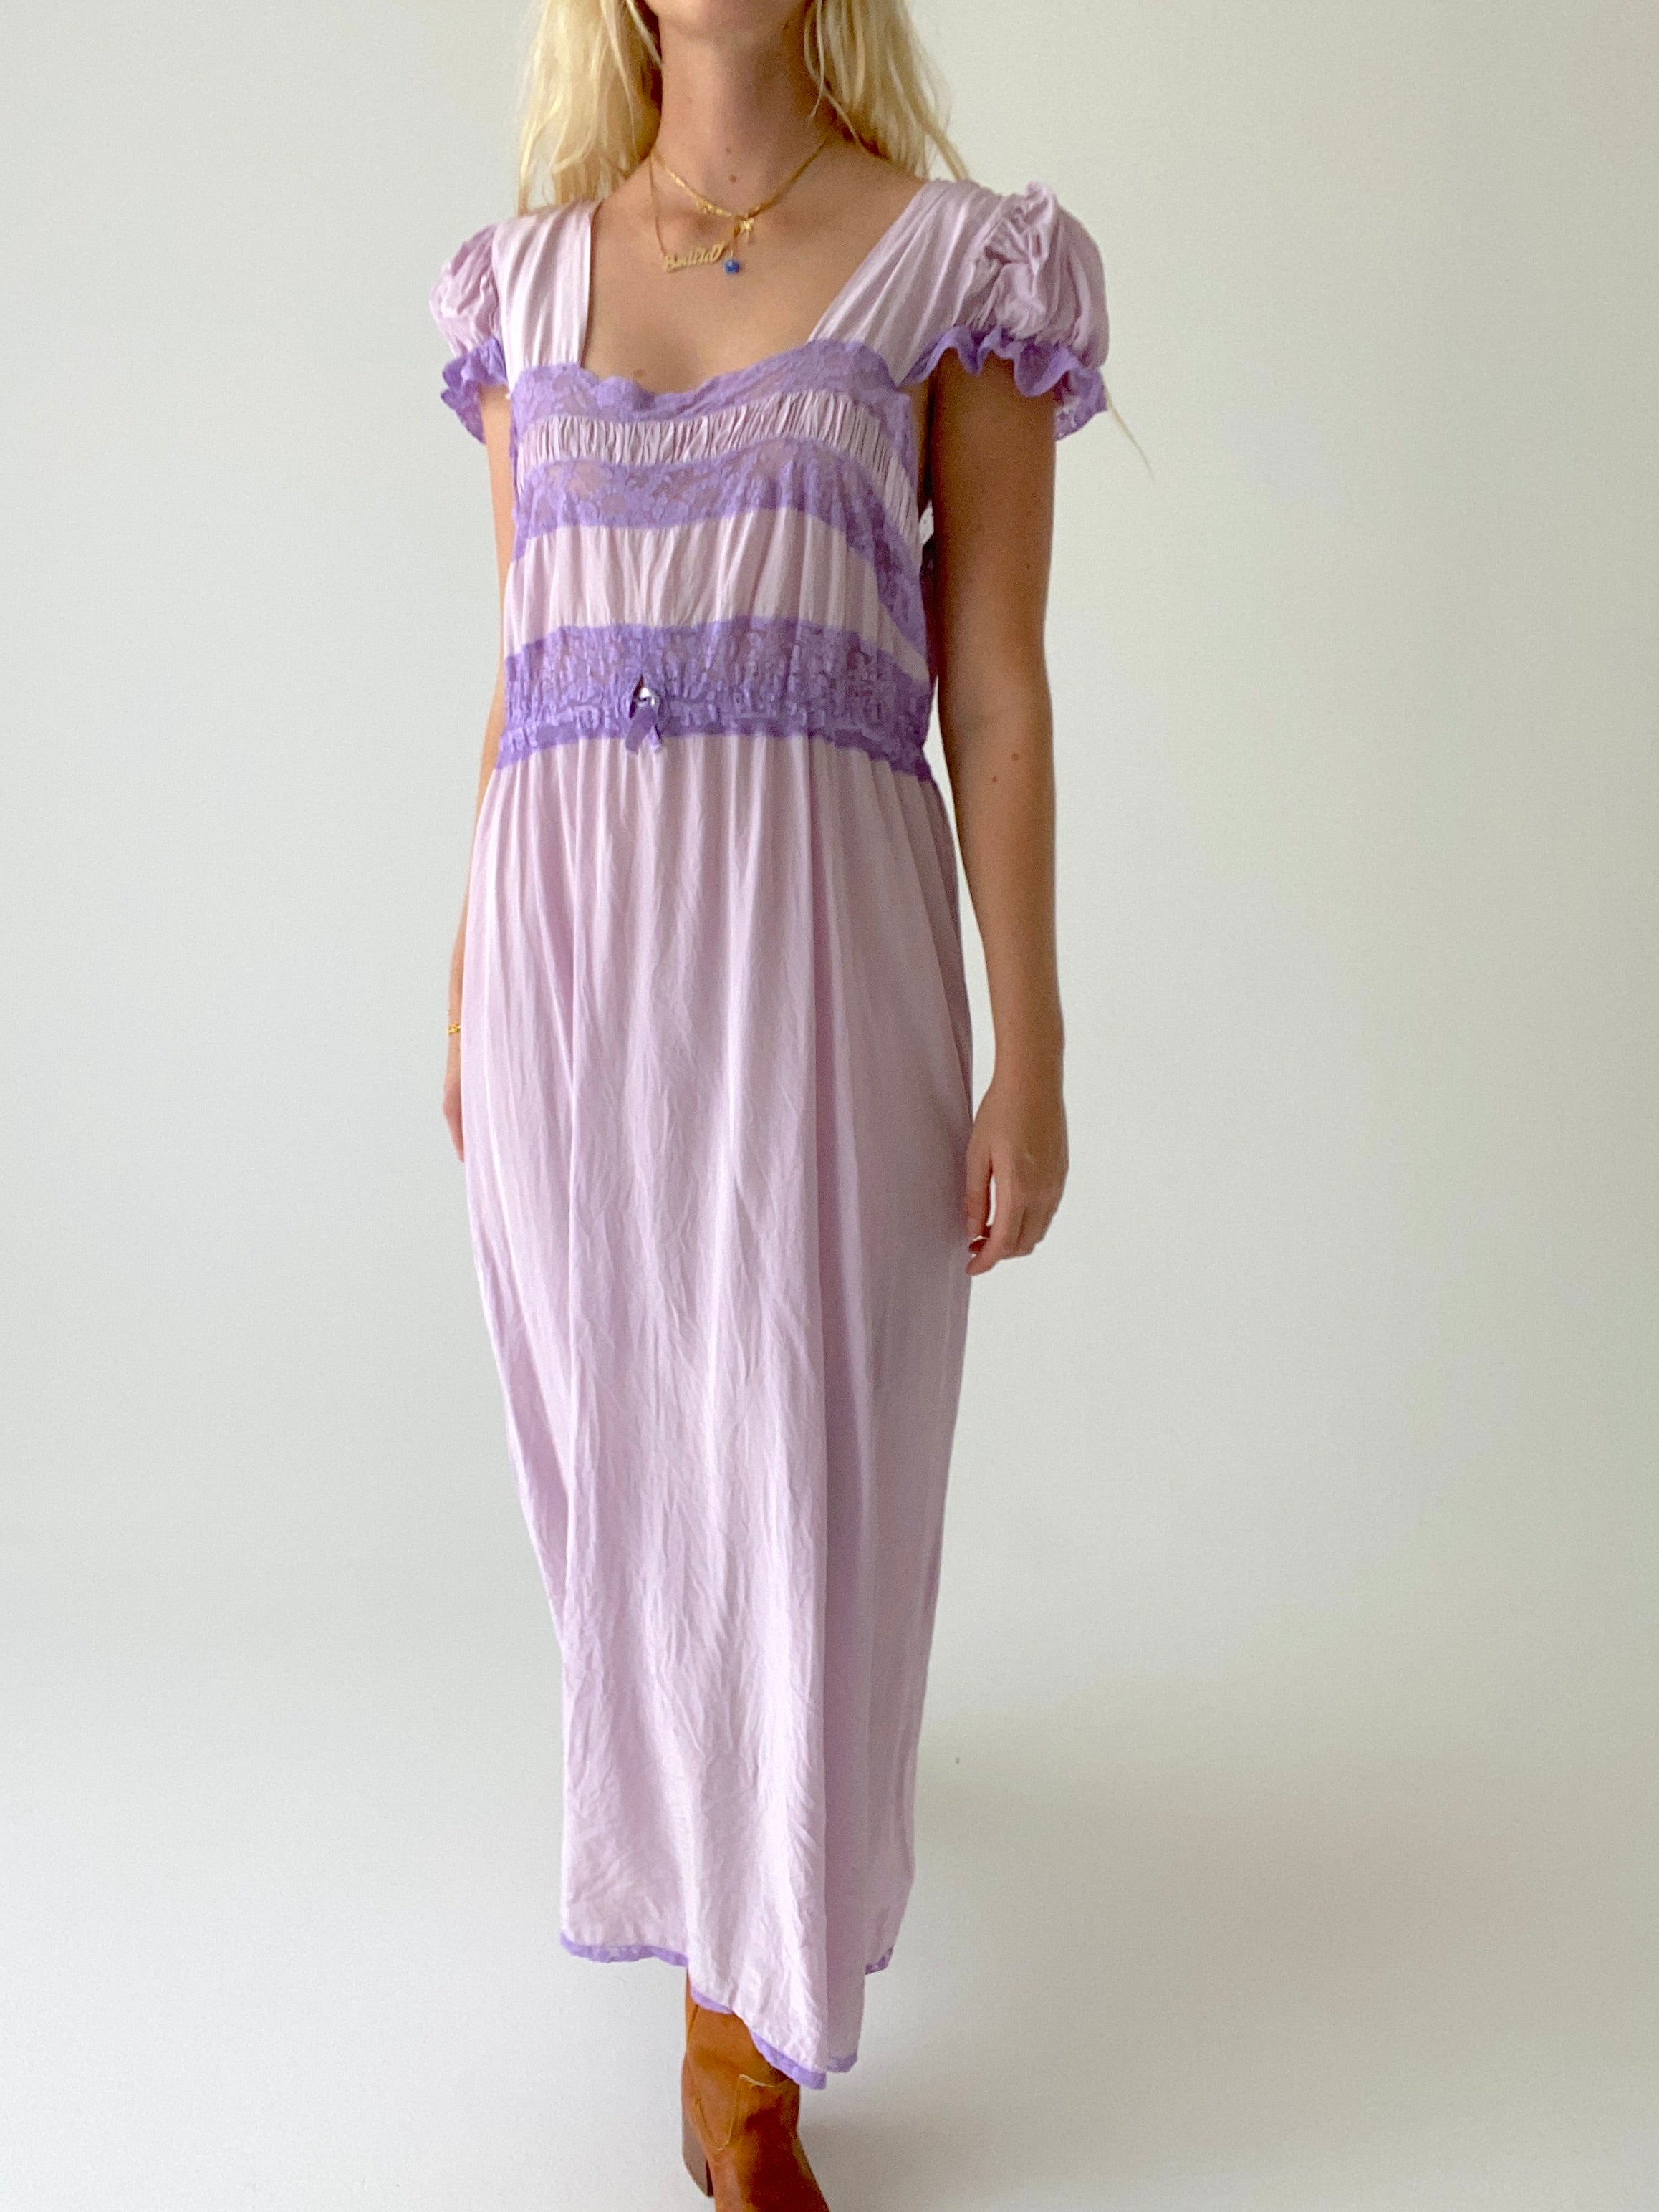 Hand Dyed Saie Lilac Dress with Puffed Sleeve